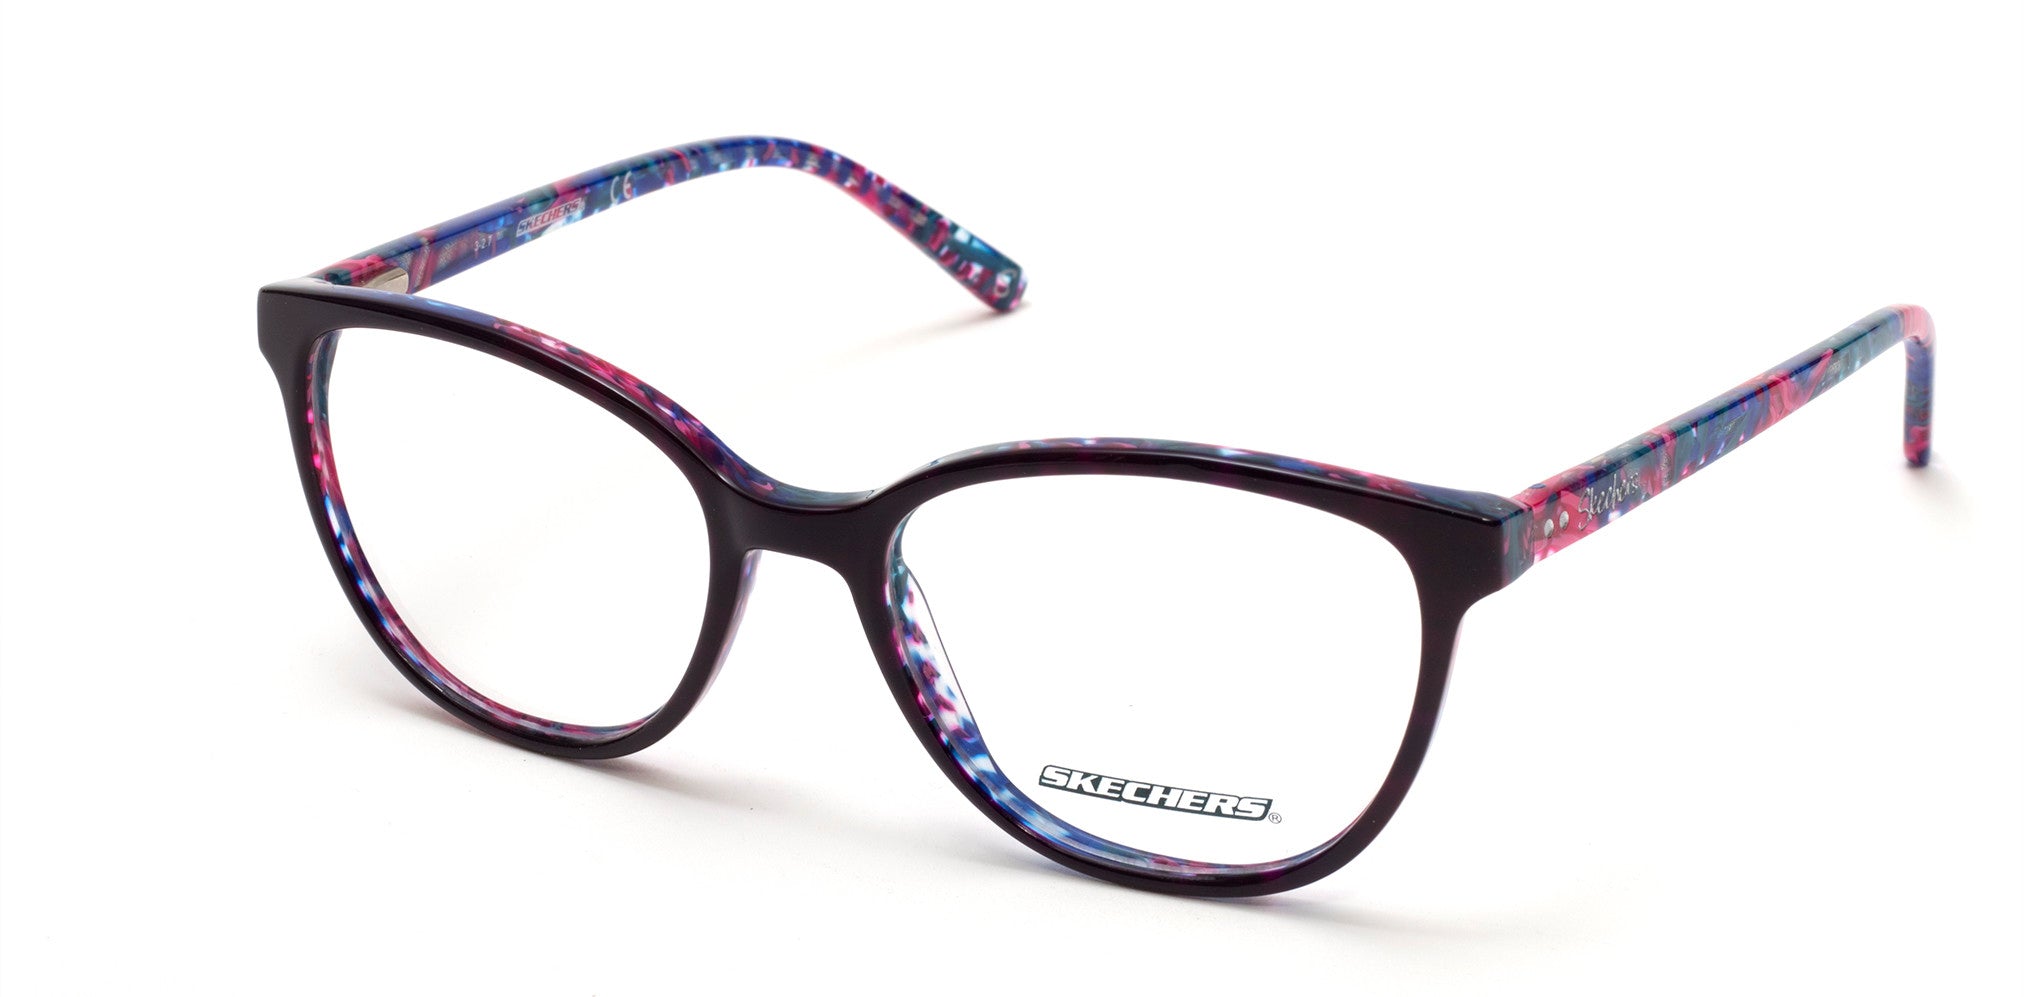 Skechers SE2137 Geometric Eyeglasses 001-001 - Shiny Black